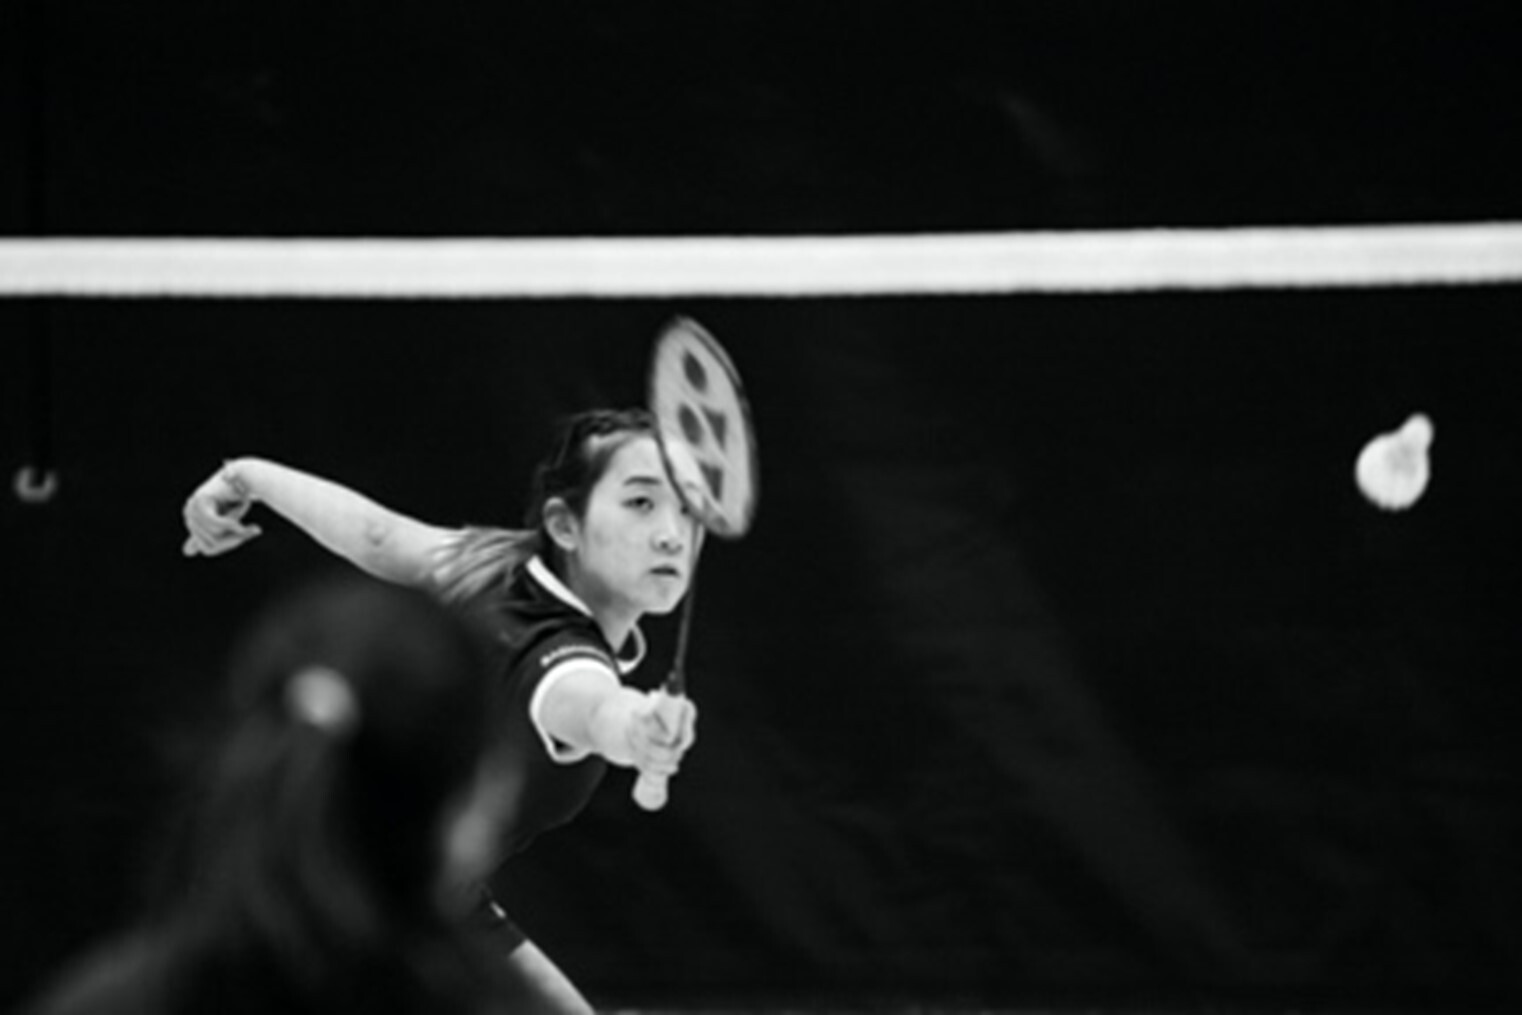 Female badminton player